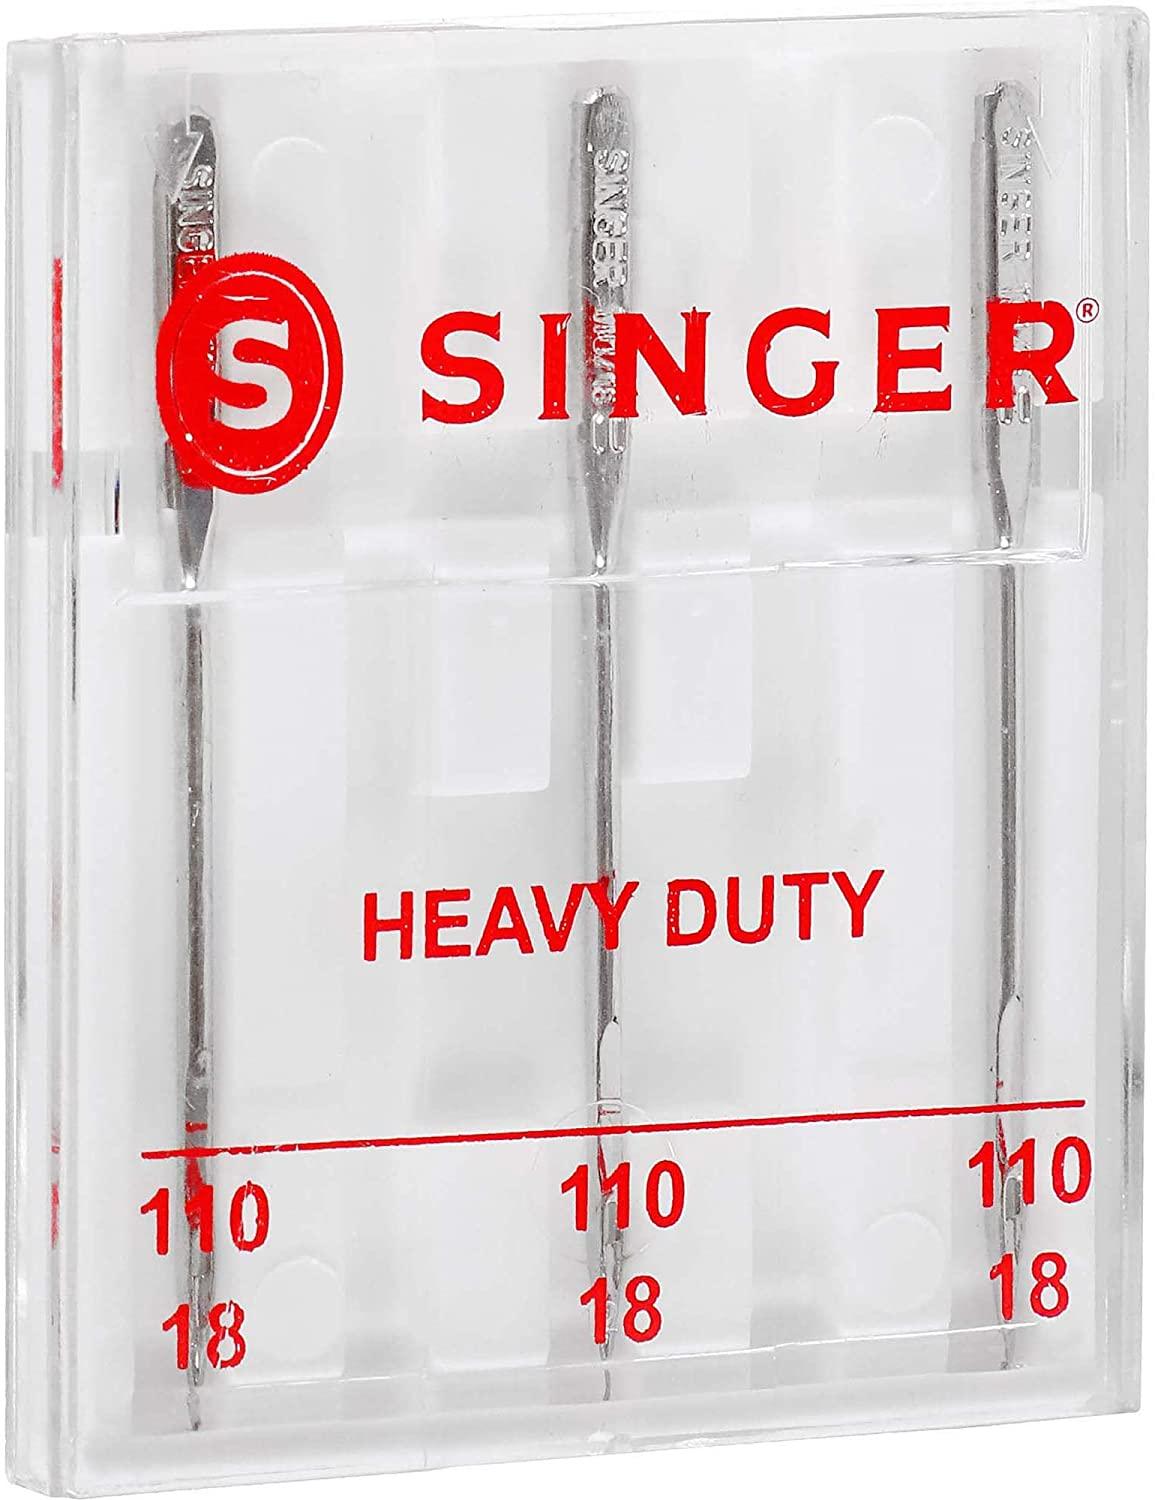 Singer Universal Heavy Duty Machine Needles, Assorted Sizes - 5 count